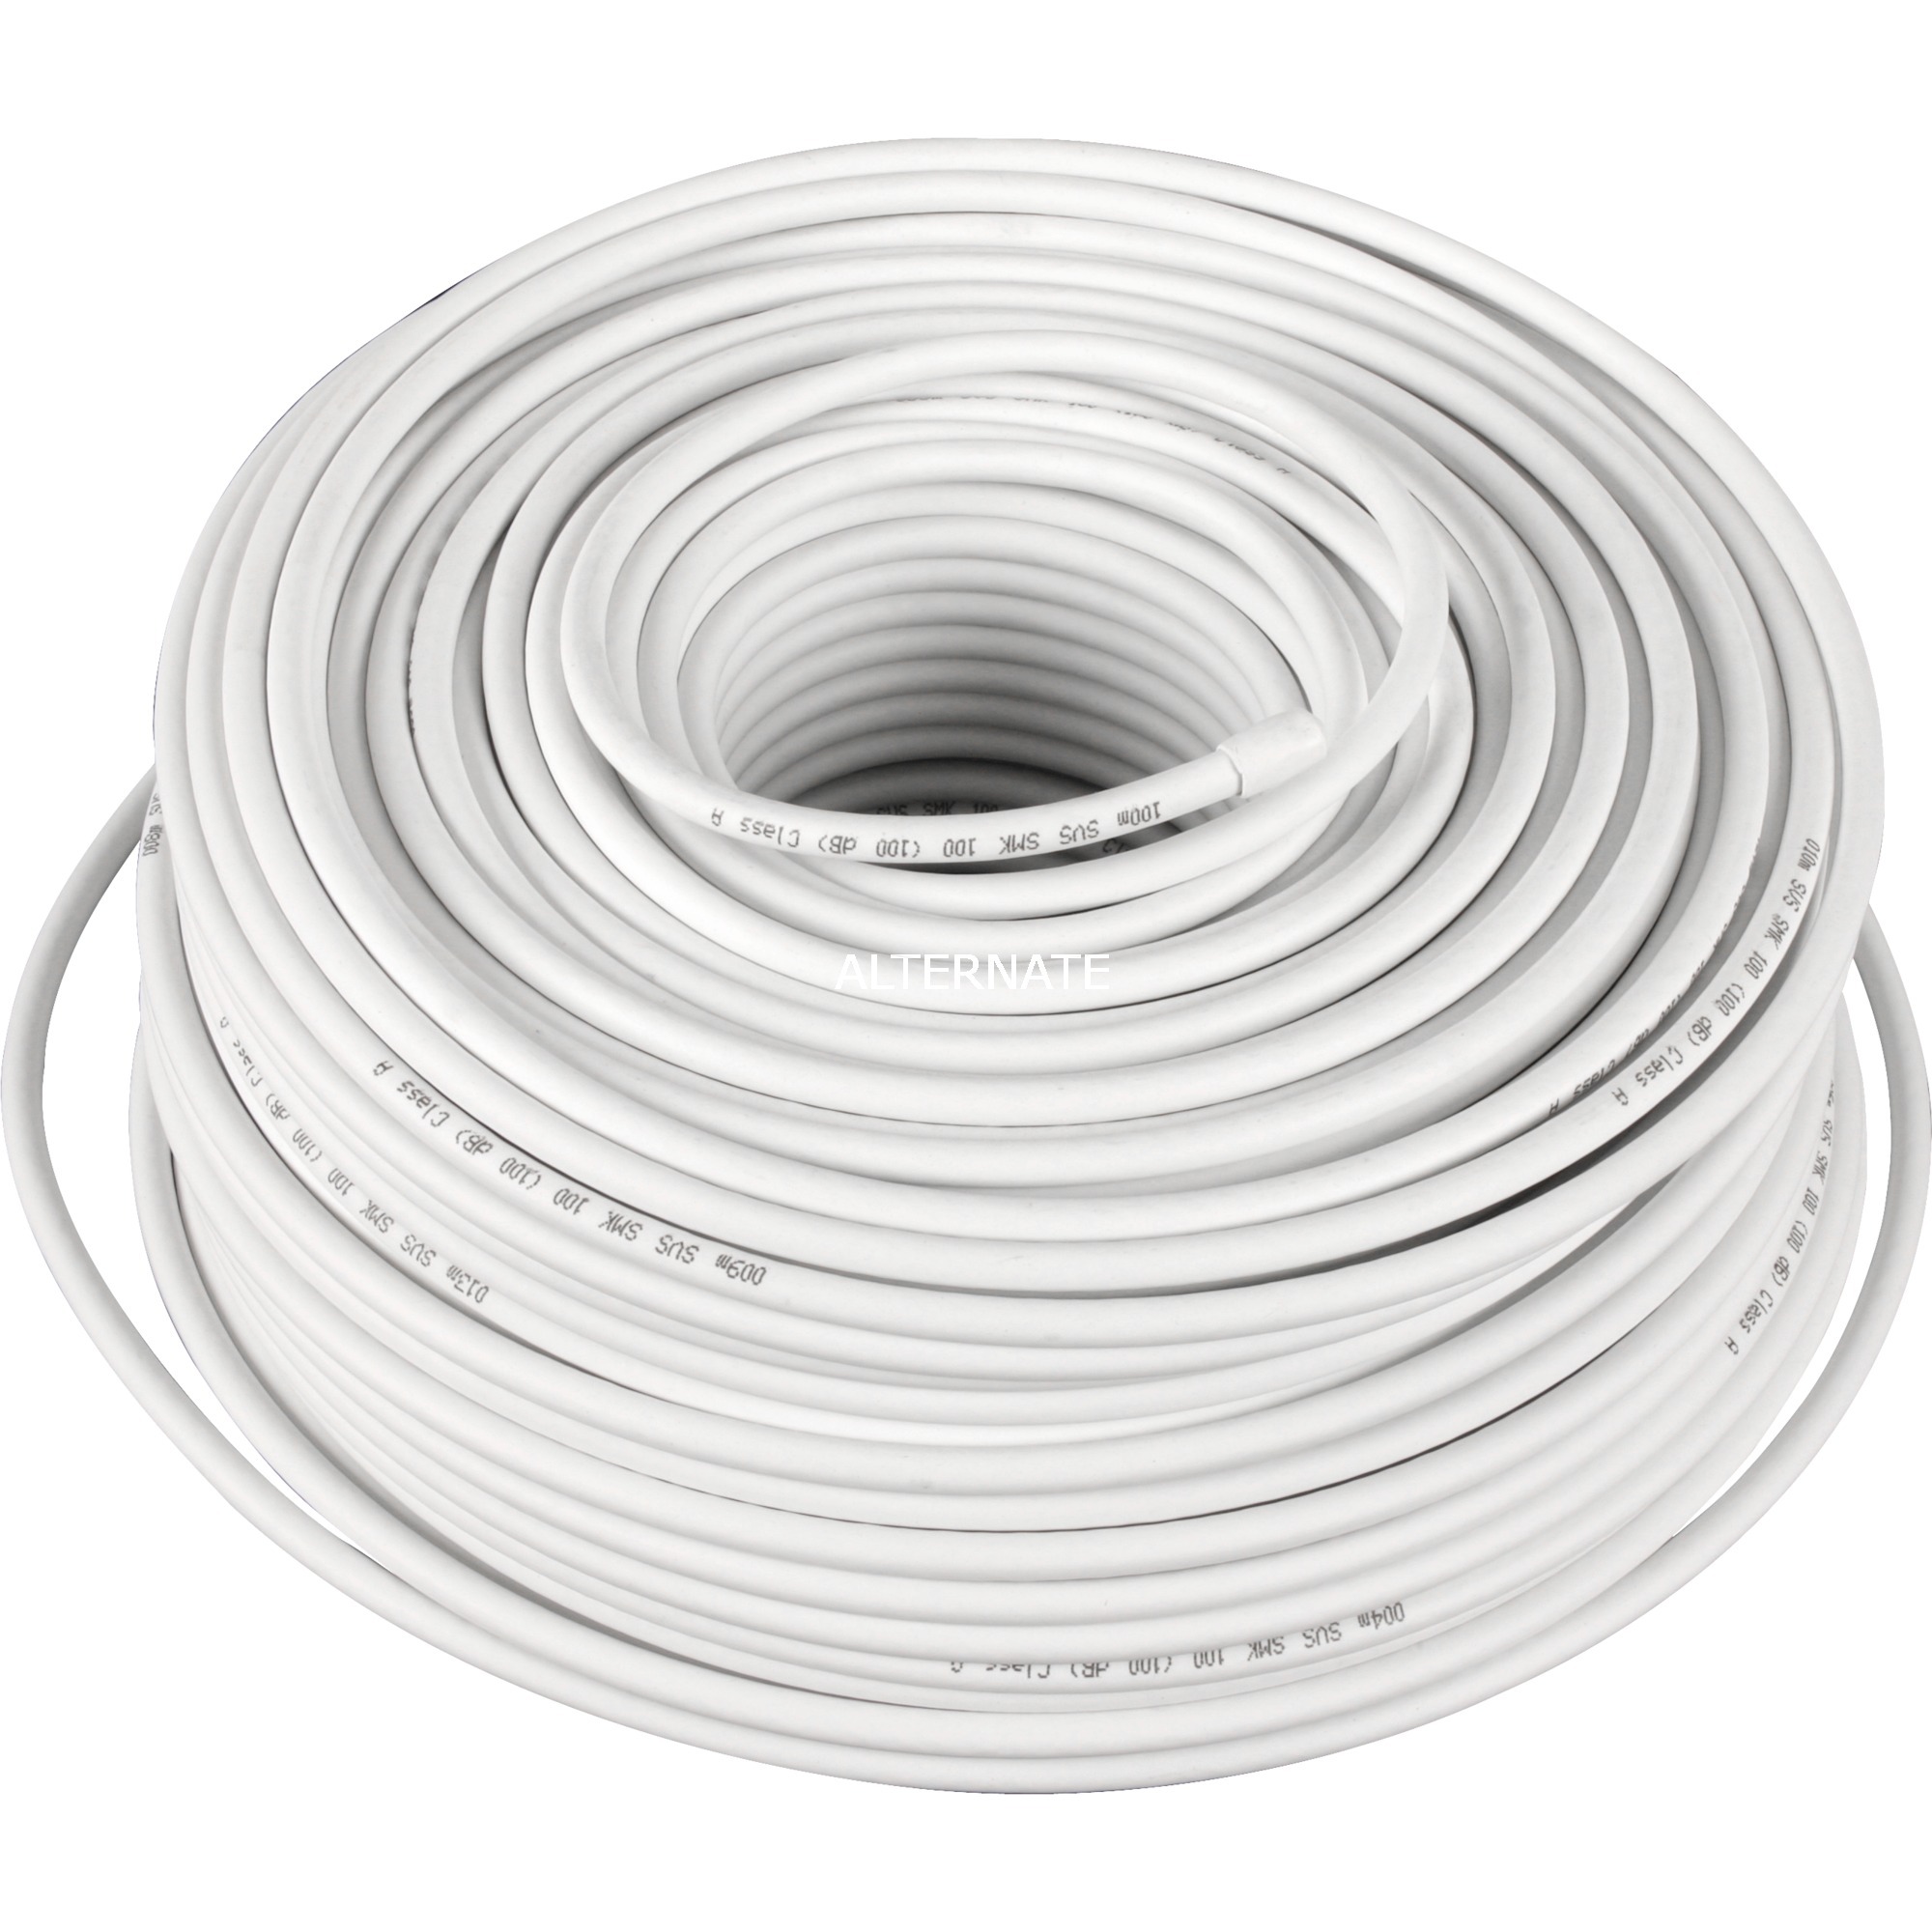 Image of Alternate - Kabel Koaxial 100 Meter Ring online einkaufen bei Alternate